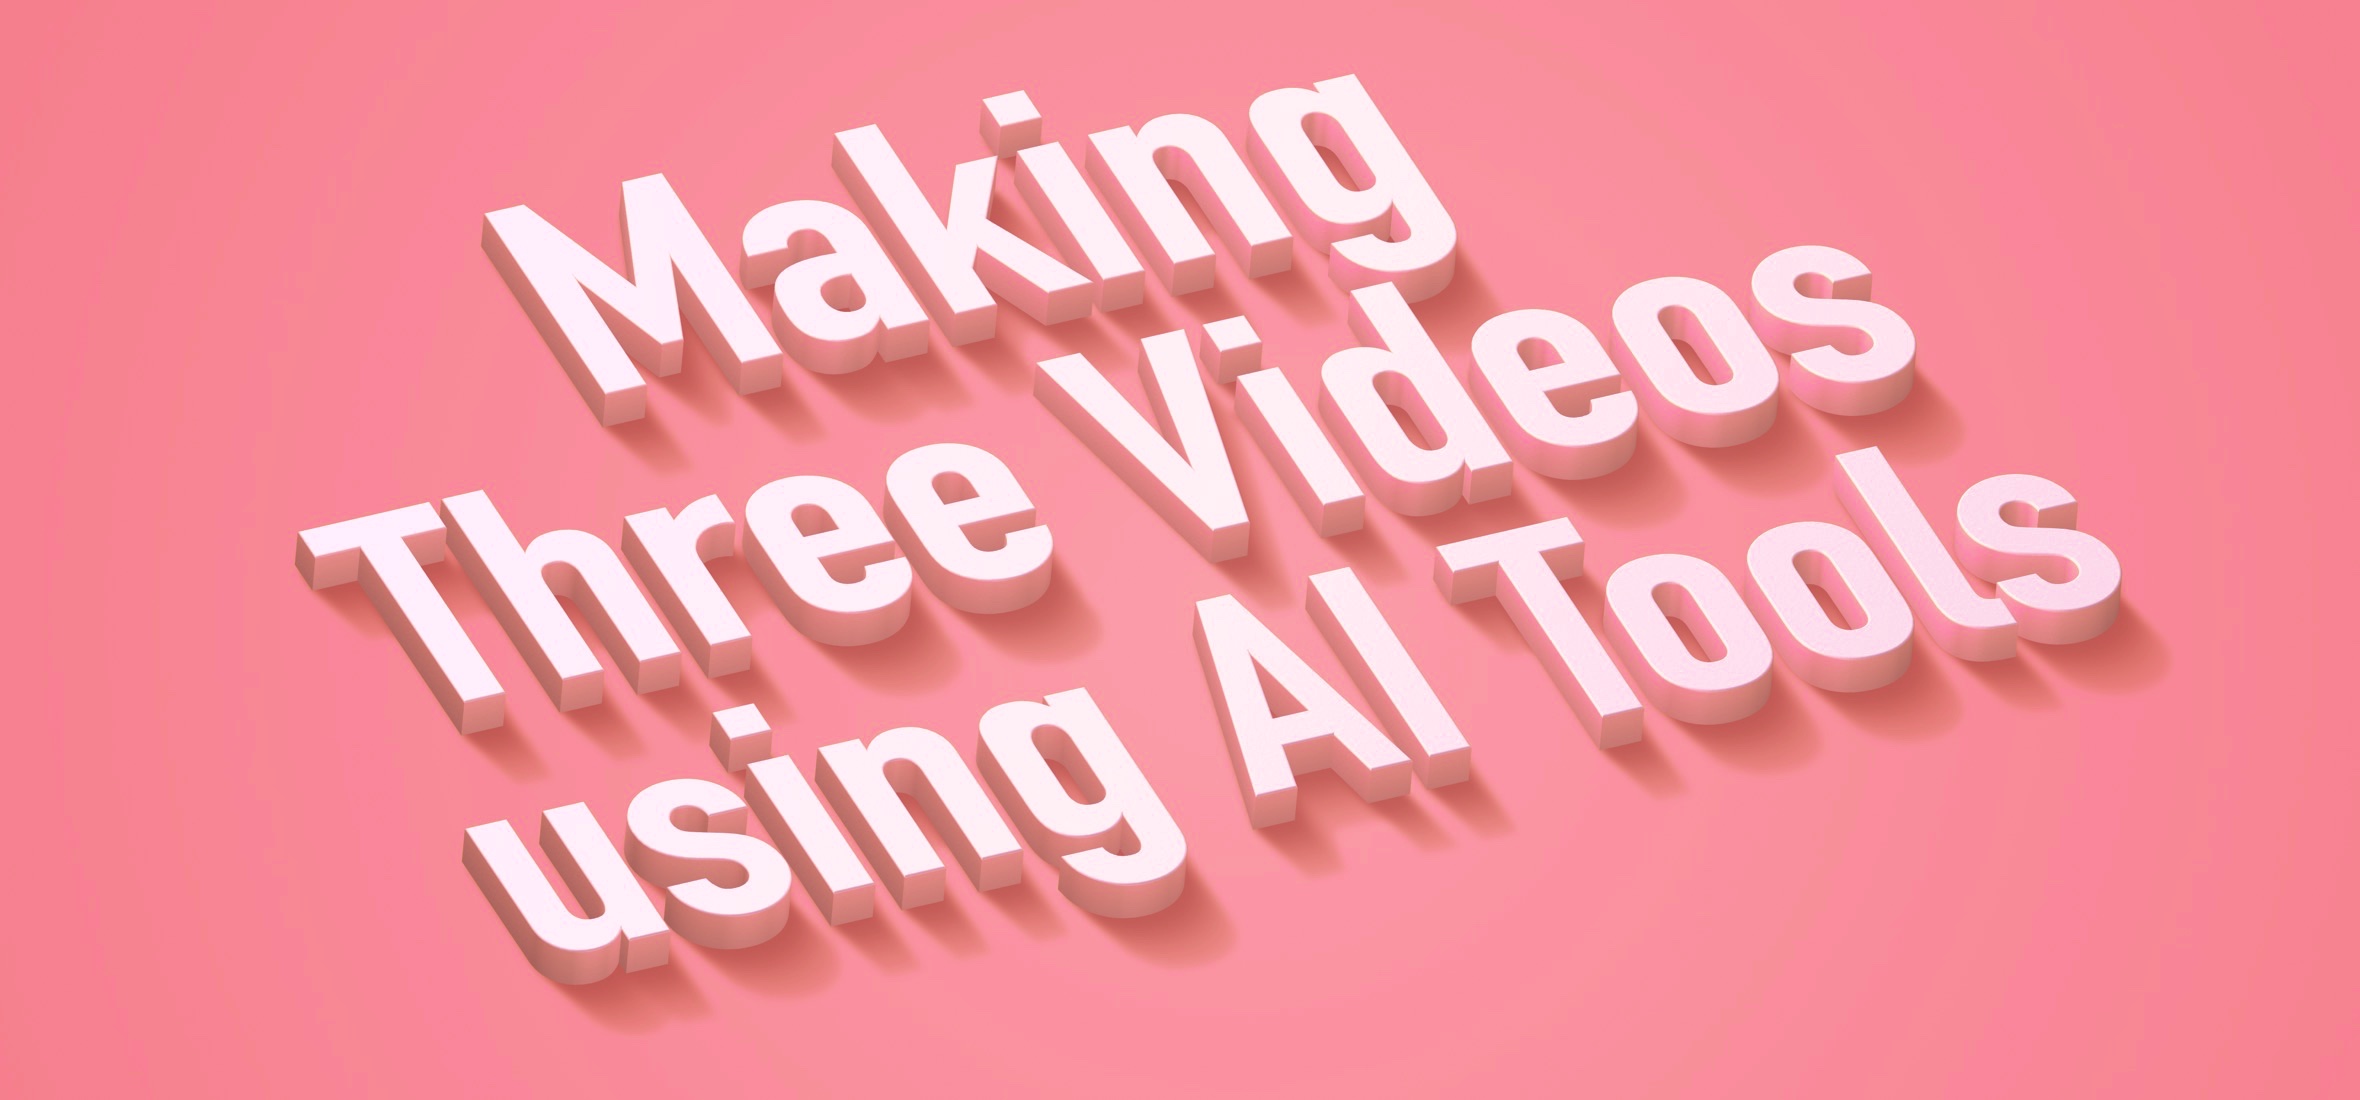 Creating Videos Using AI